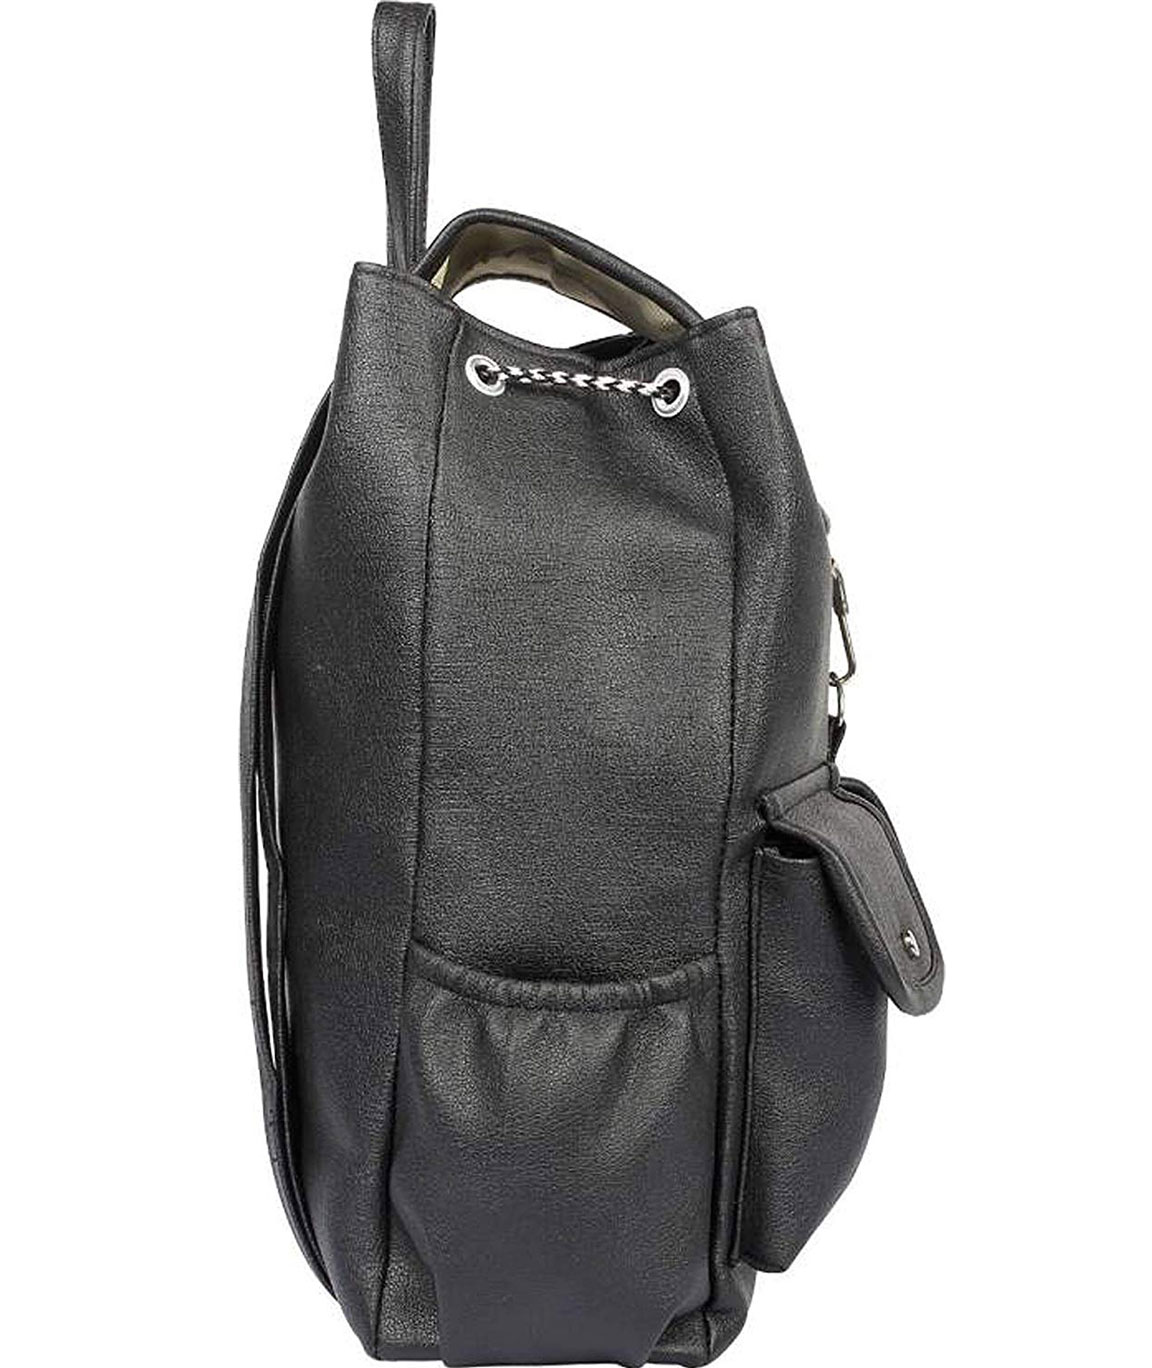 TAS fashion New leather backpack black colour 25 L Laptop Backpack black -  Price in India | Flipkart.com